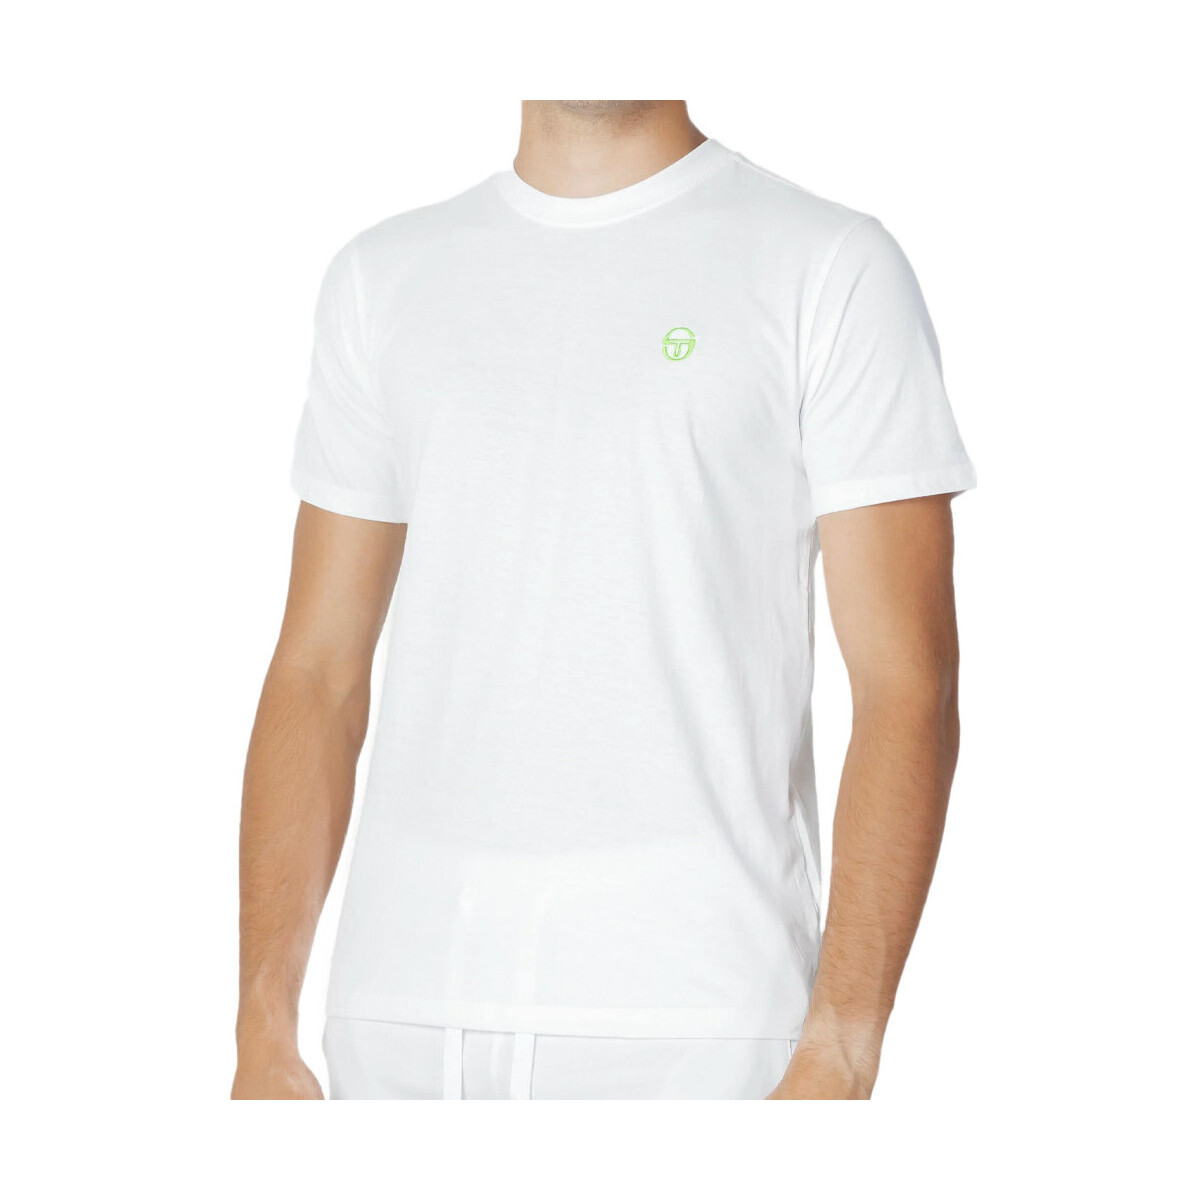 Vêtements Homme T-shirts manches courtes Sergio Tacchini 103-20029 Blanc